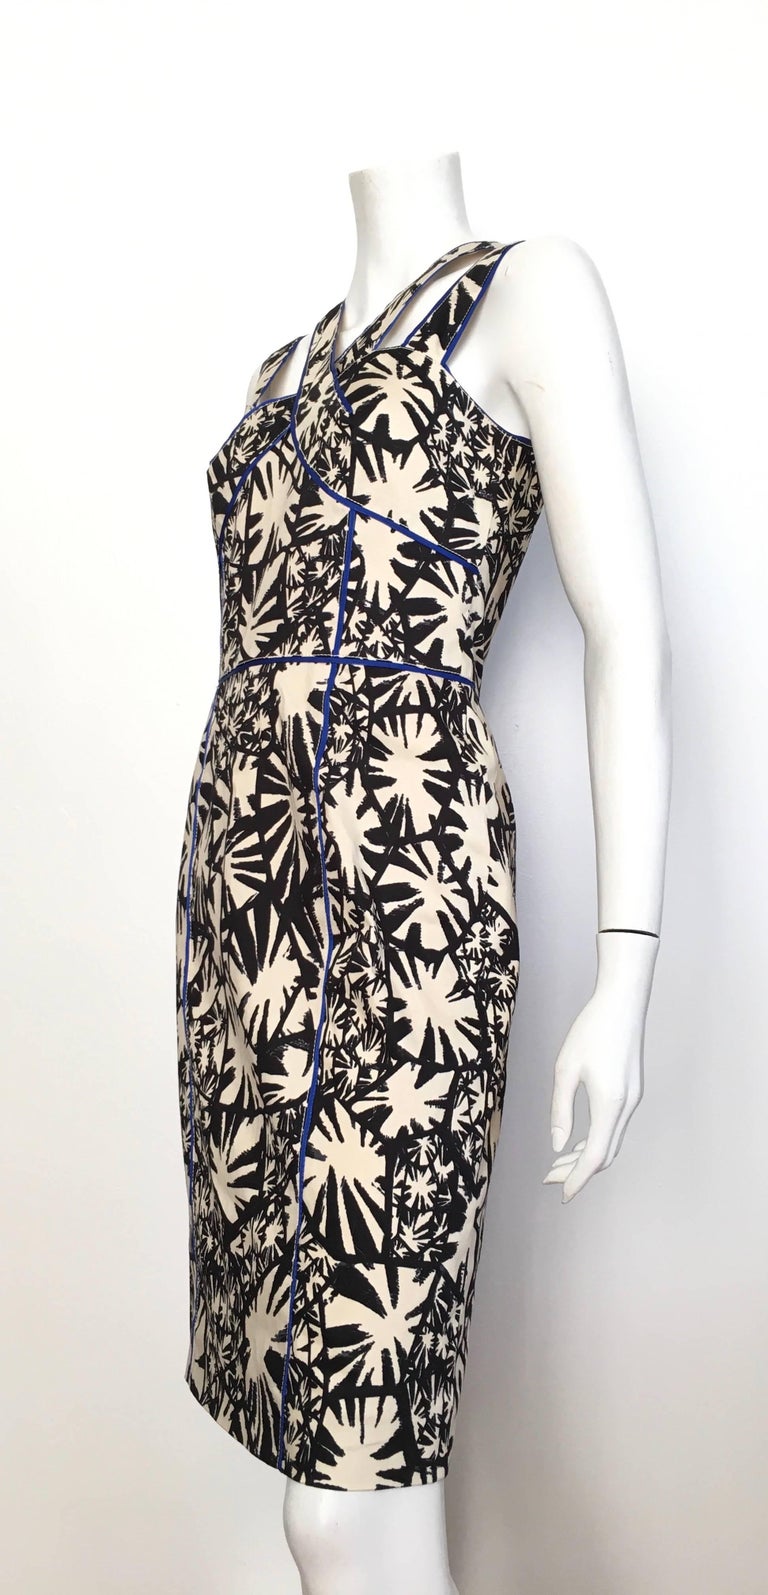 Oscar de la Renta Cotton Sleeveless Dress Size 8. For Sale at 1stdibs